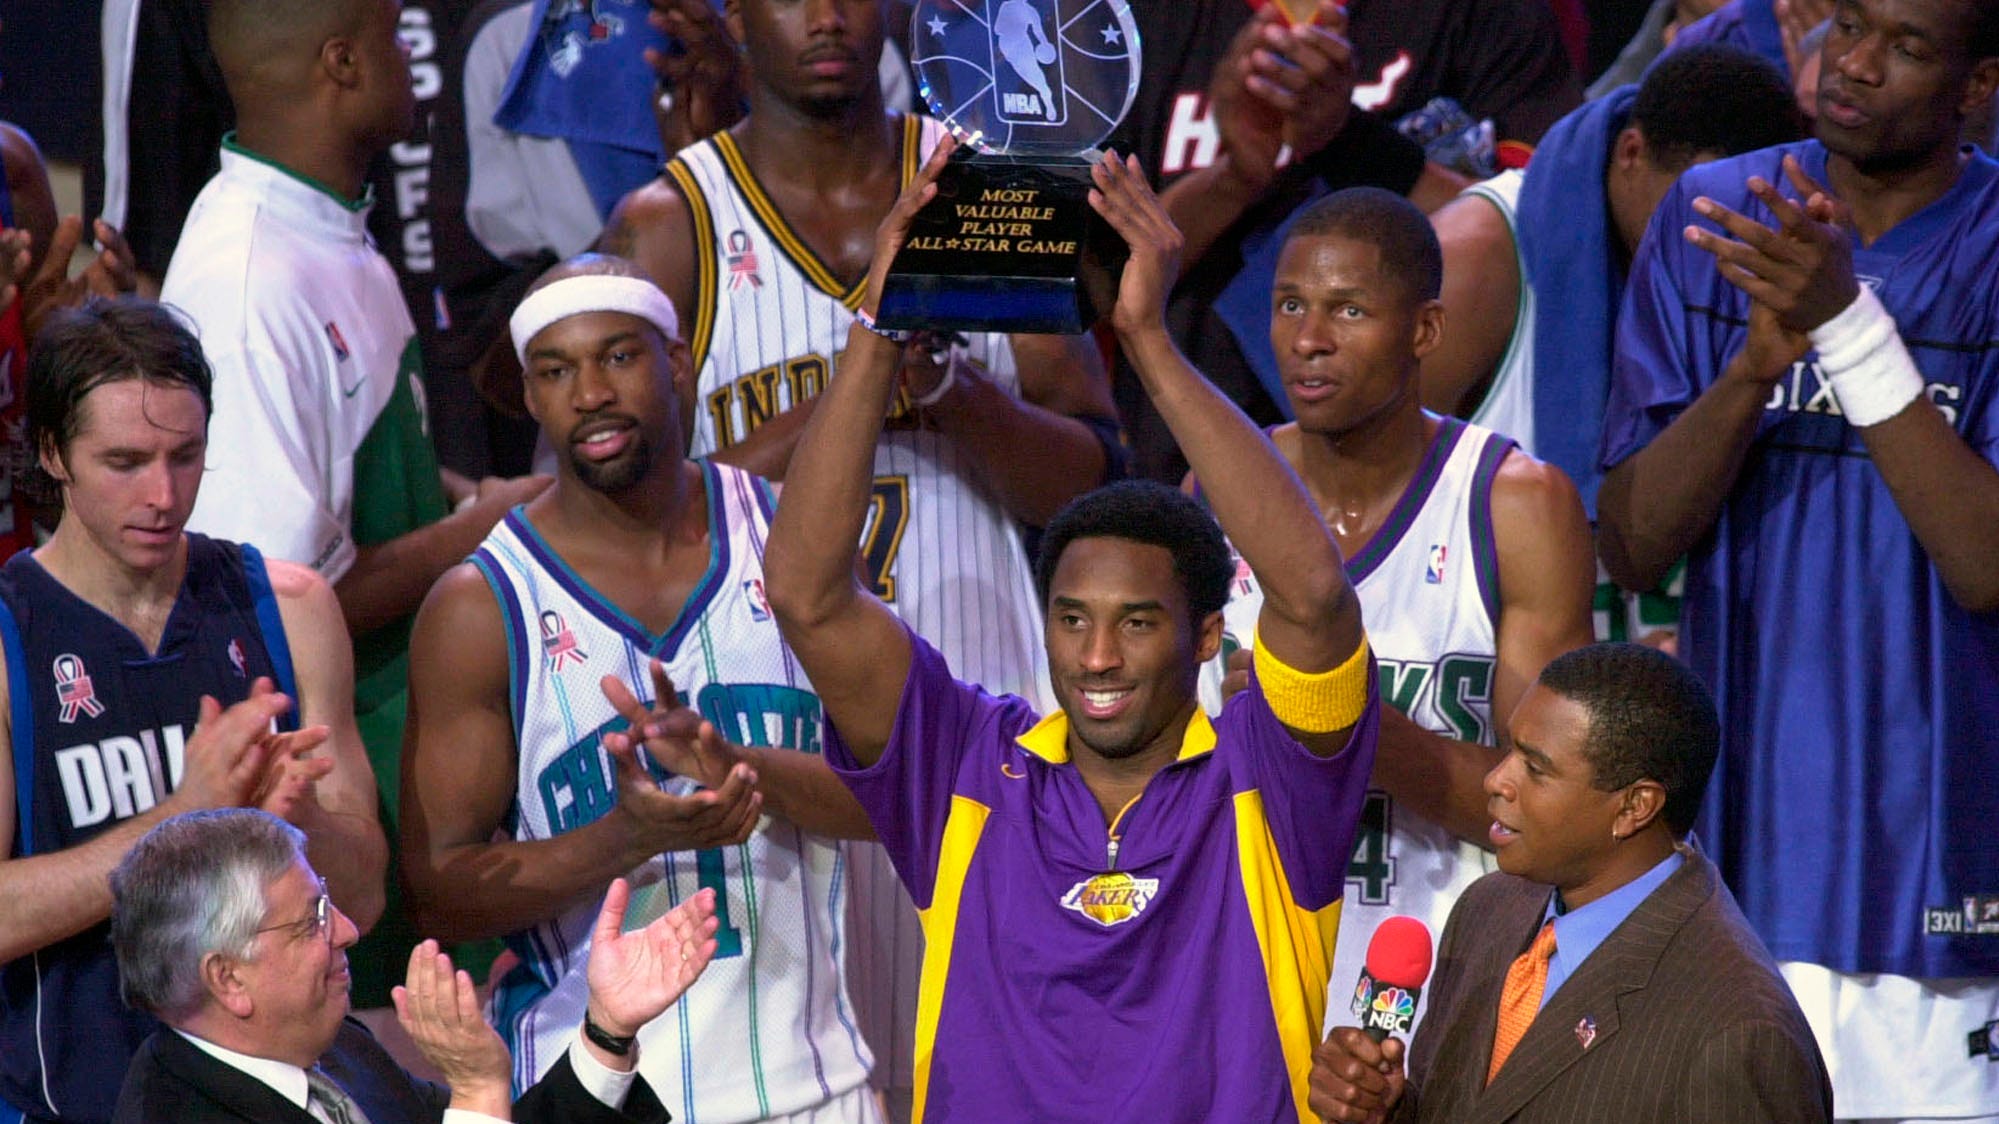 Nba Announces Kobe Bryant Tribute As Part Of All Star Game Tweaks 